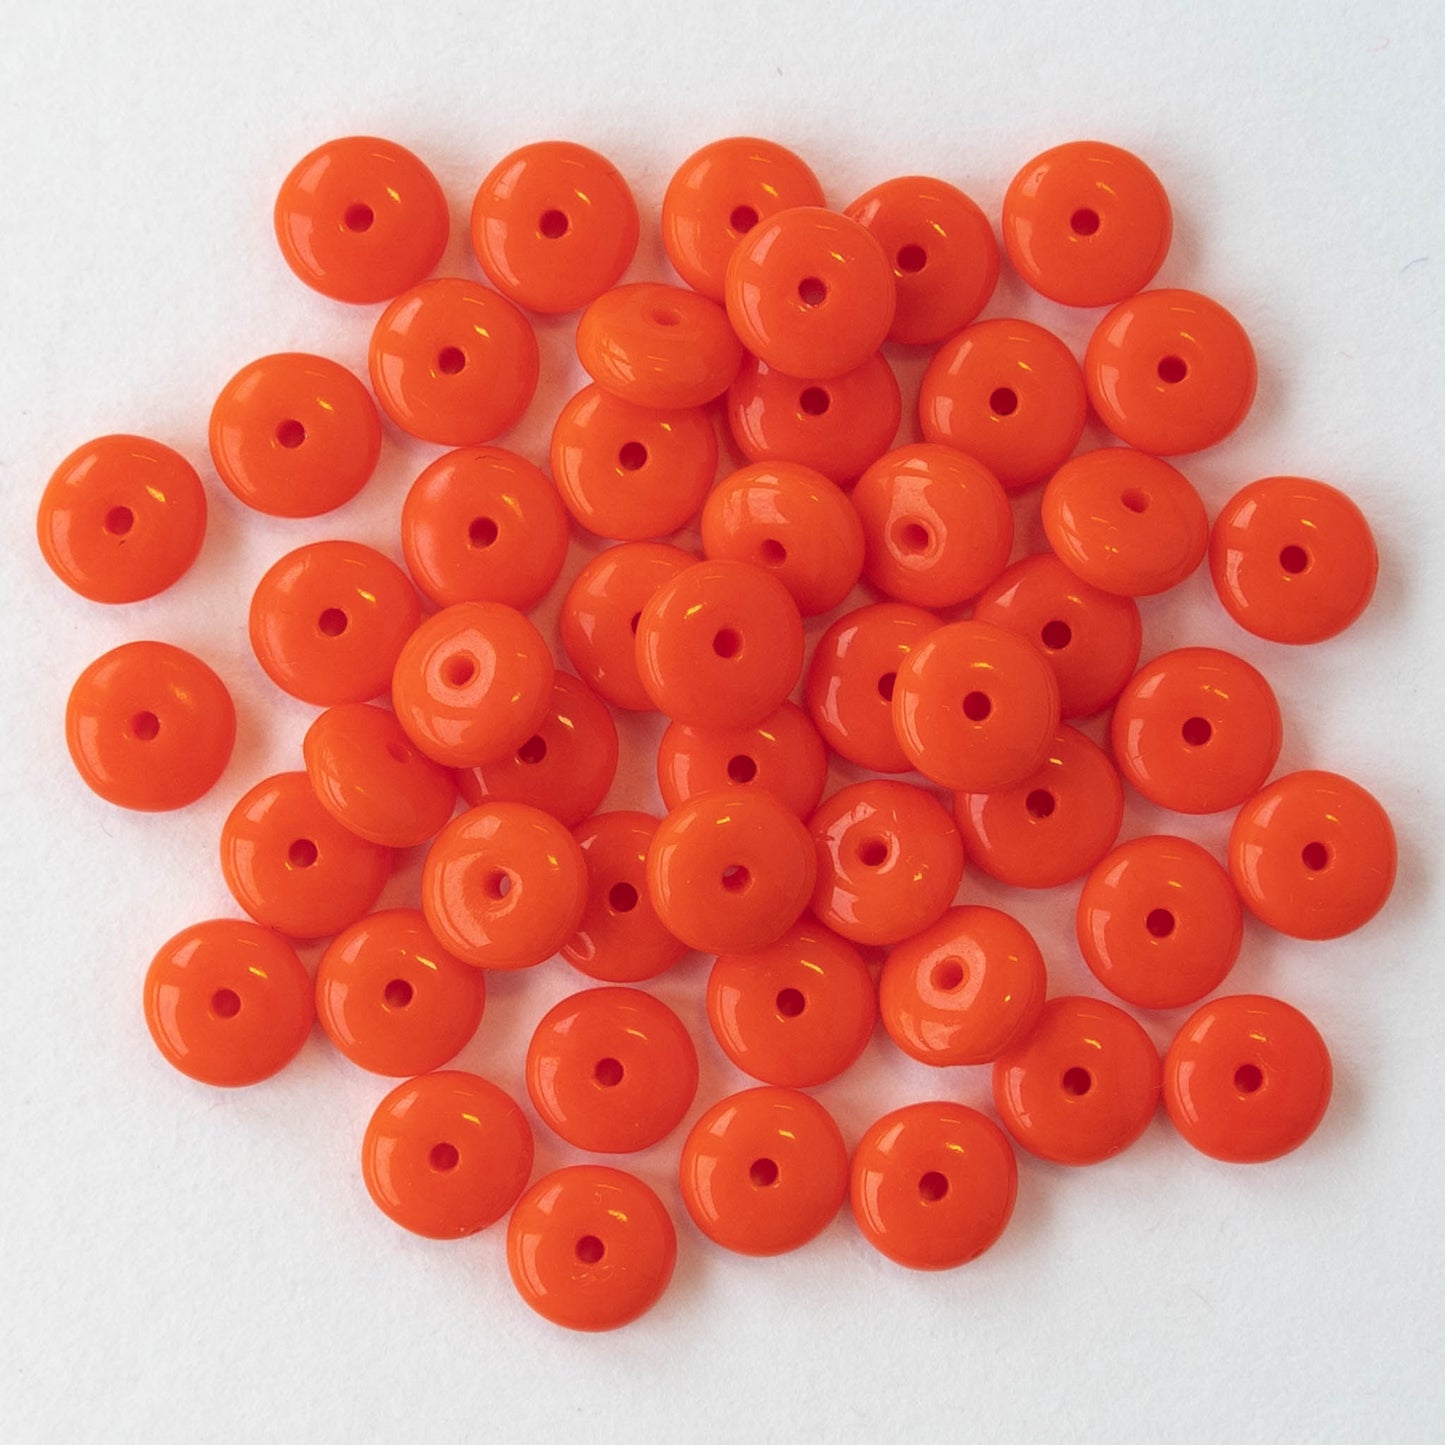 6mm Glass Rondelle Beads - Opaque Orange - 50 Beads